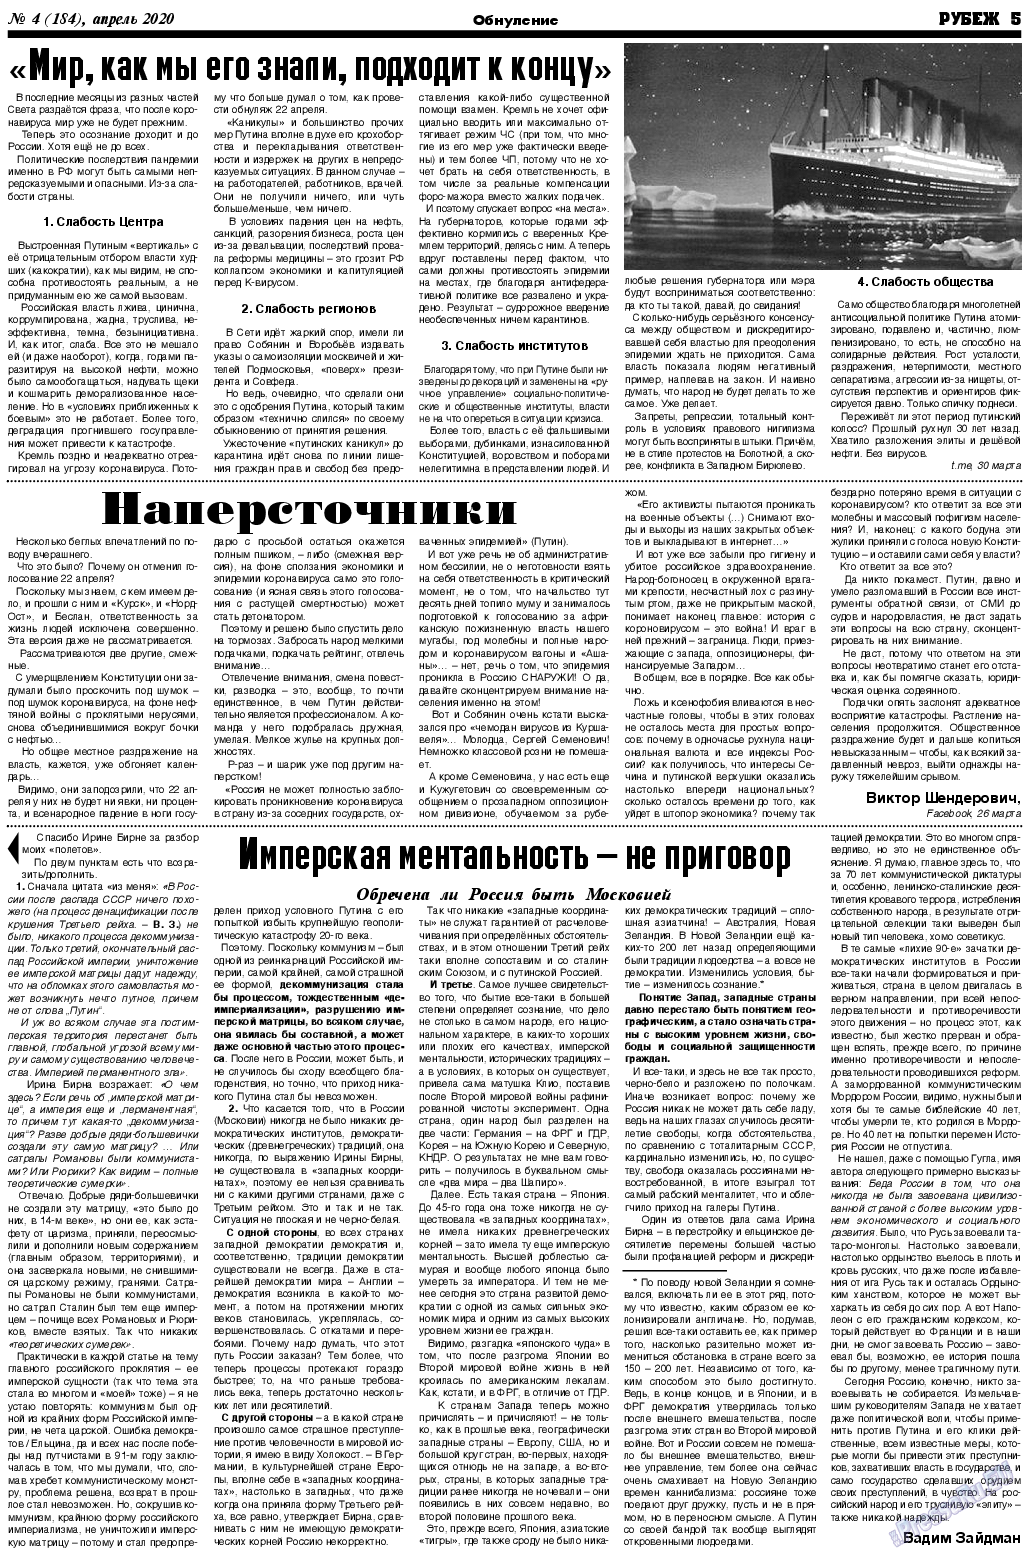 Рубеж, газета. 2020 №4 стр.5